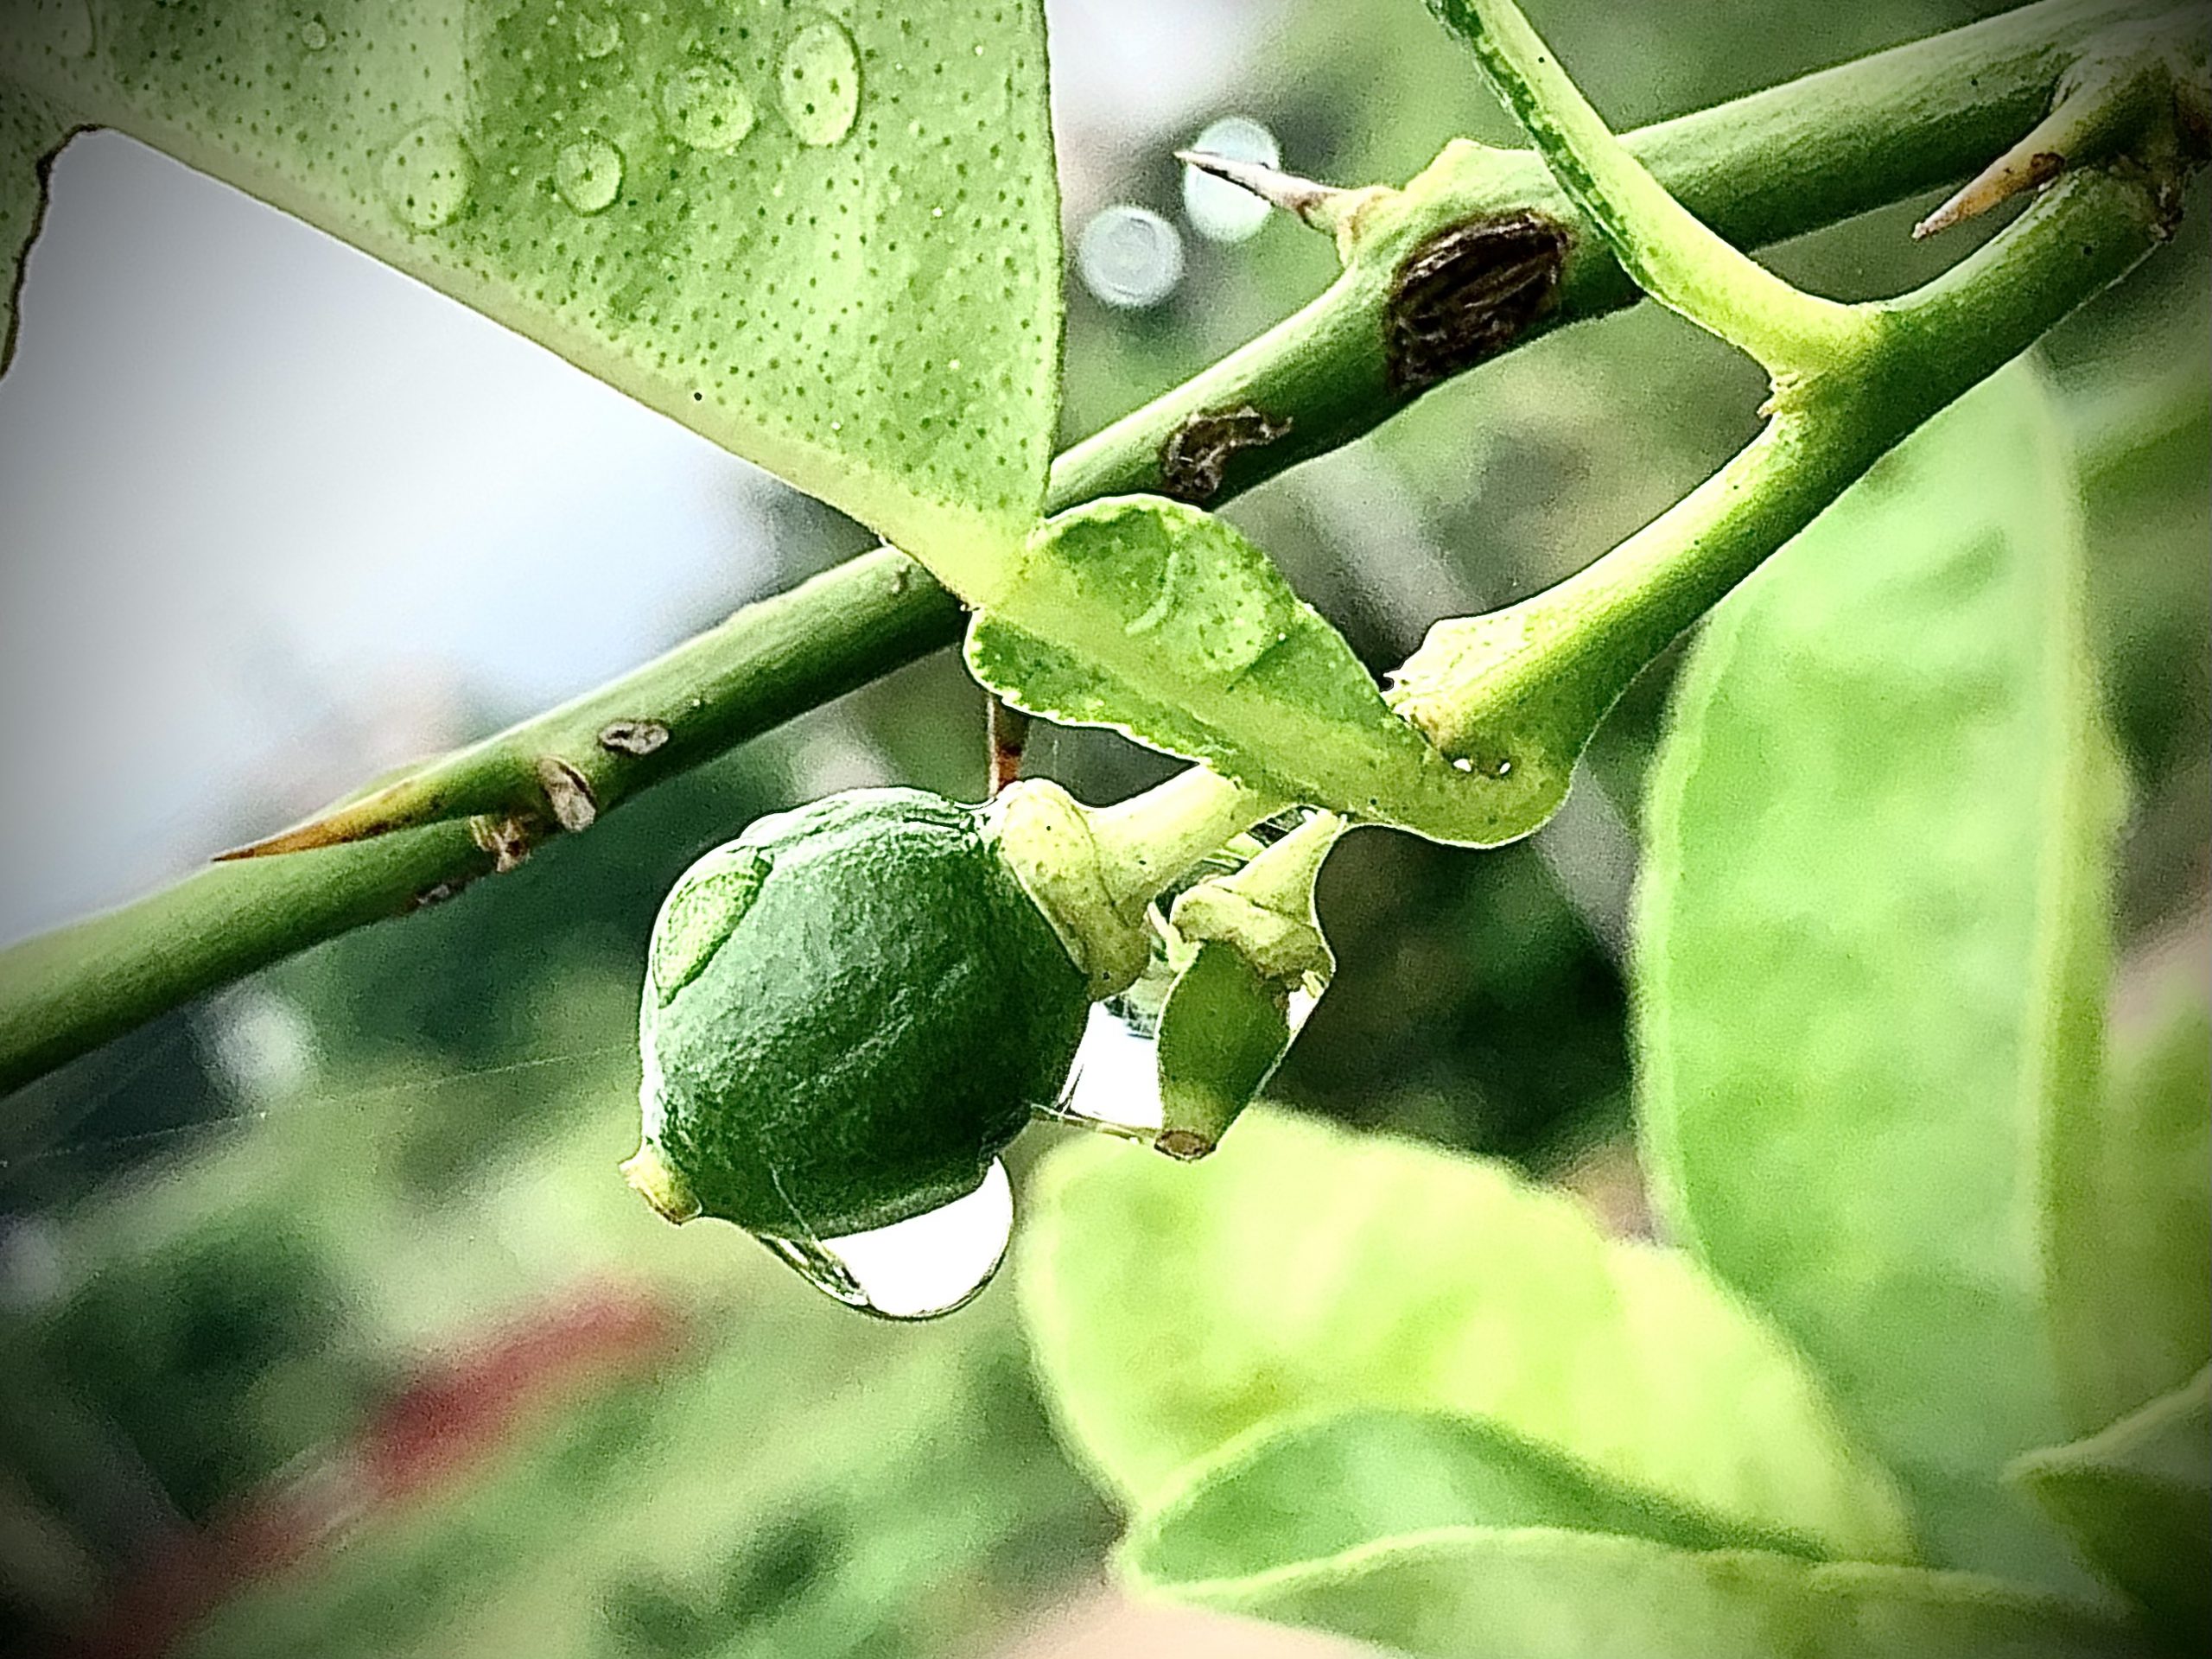 Lemon Bud with Drops